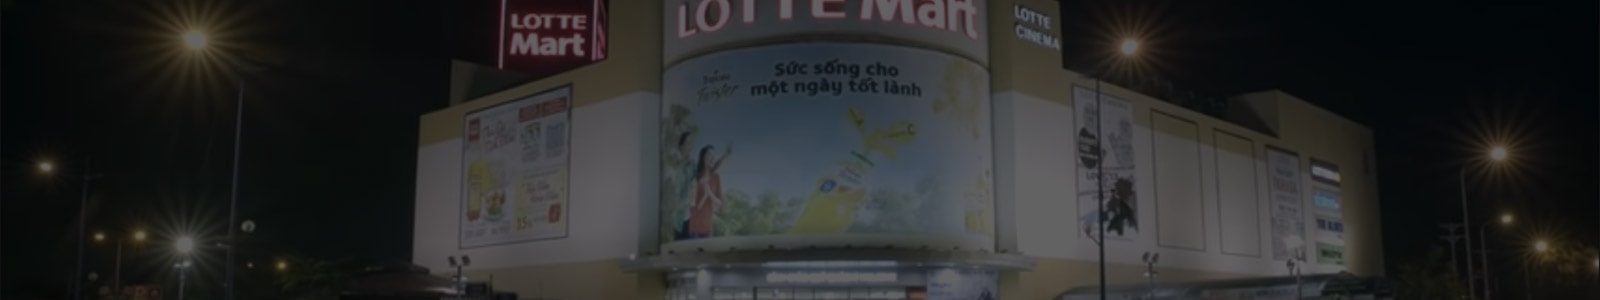 LG Chiller Case Study Shopping Mall Solution_Vietnam "LOTTE Mart"1